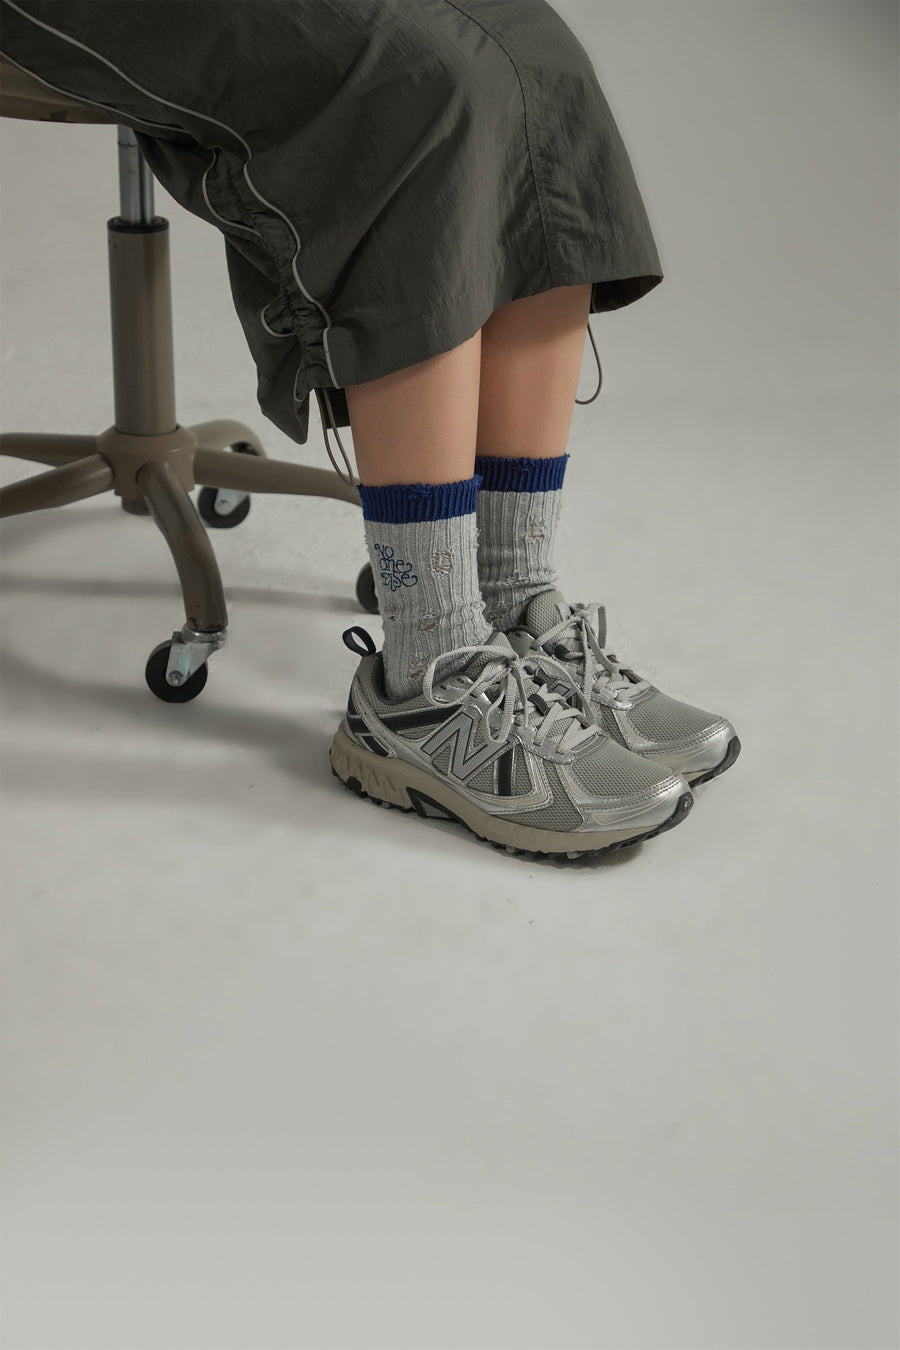 CHUU Distressed Embroidered Color High Socks